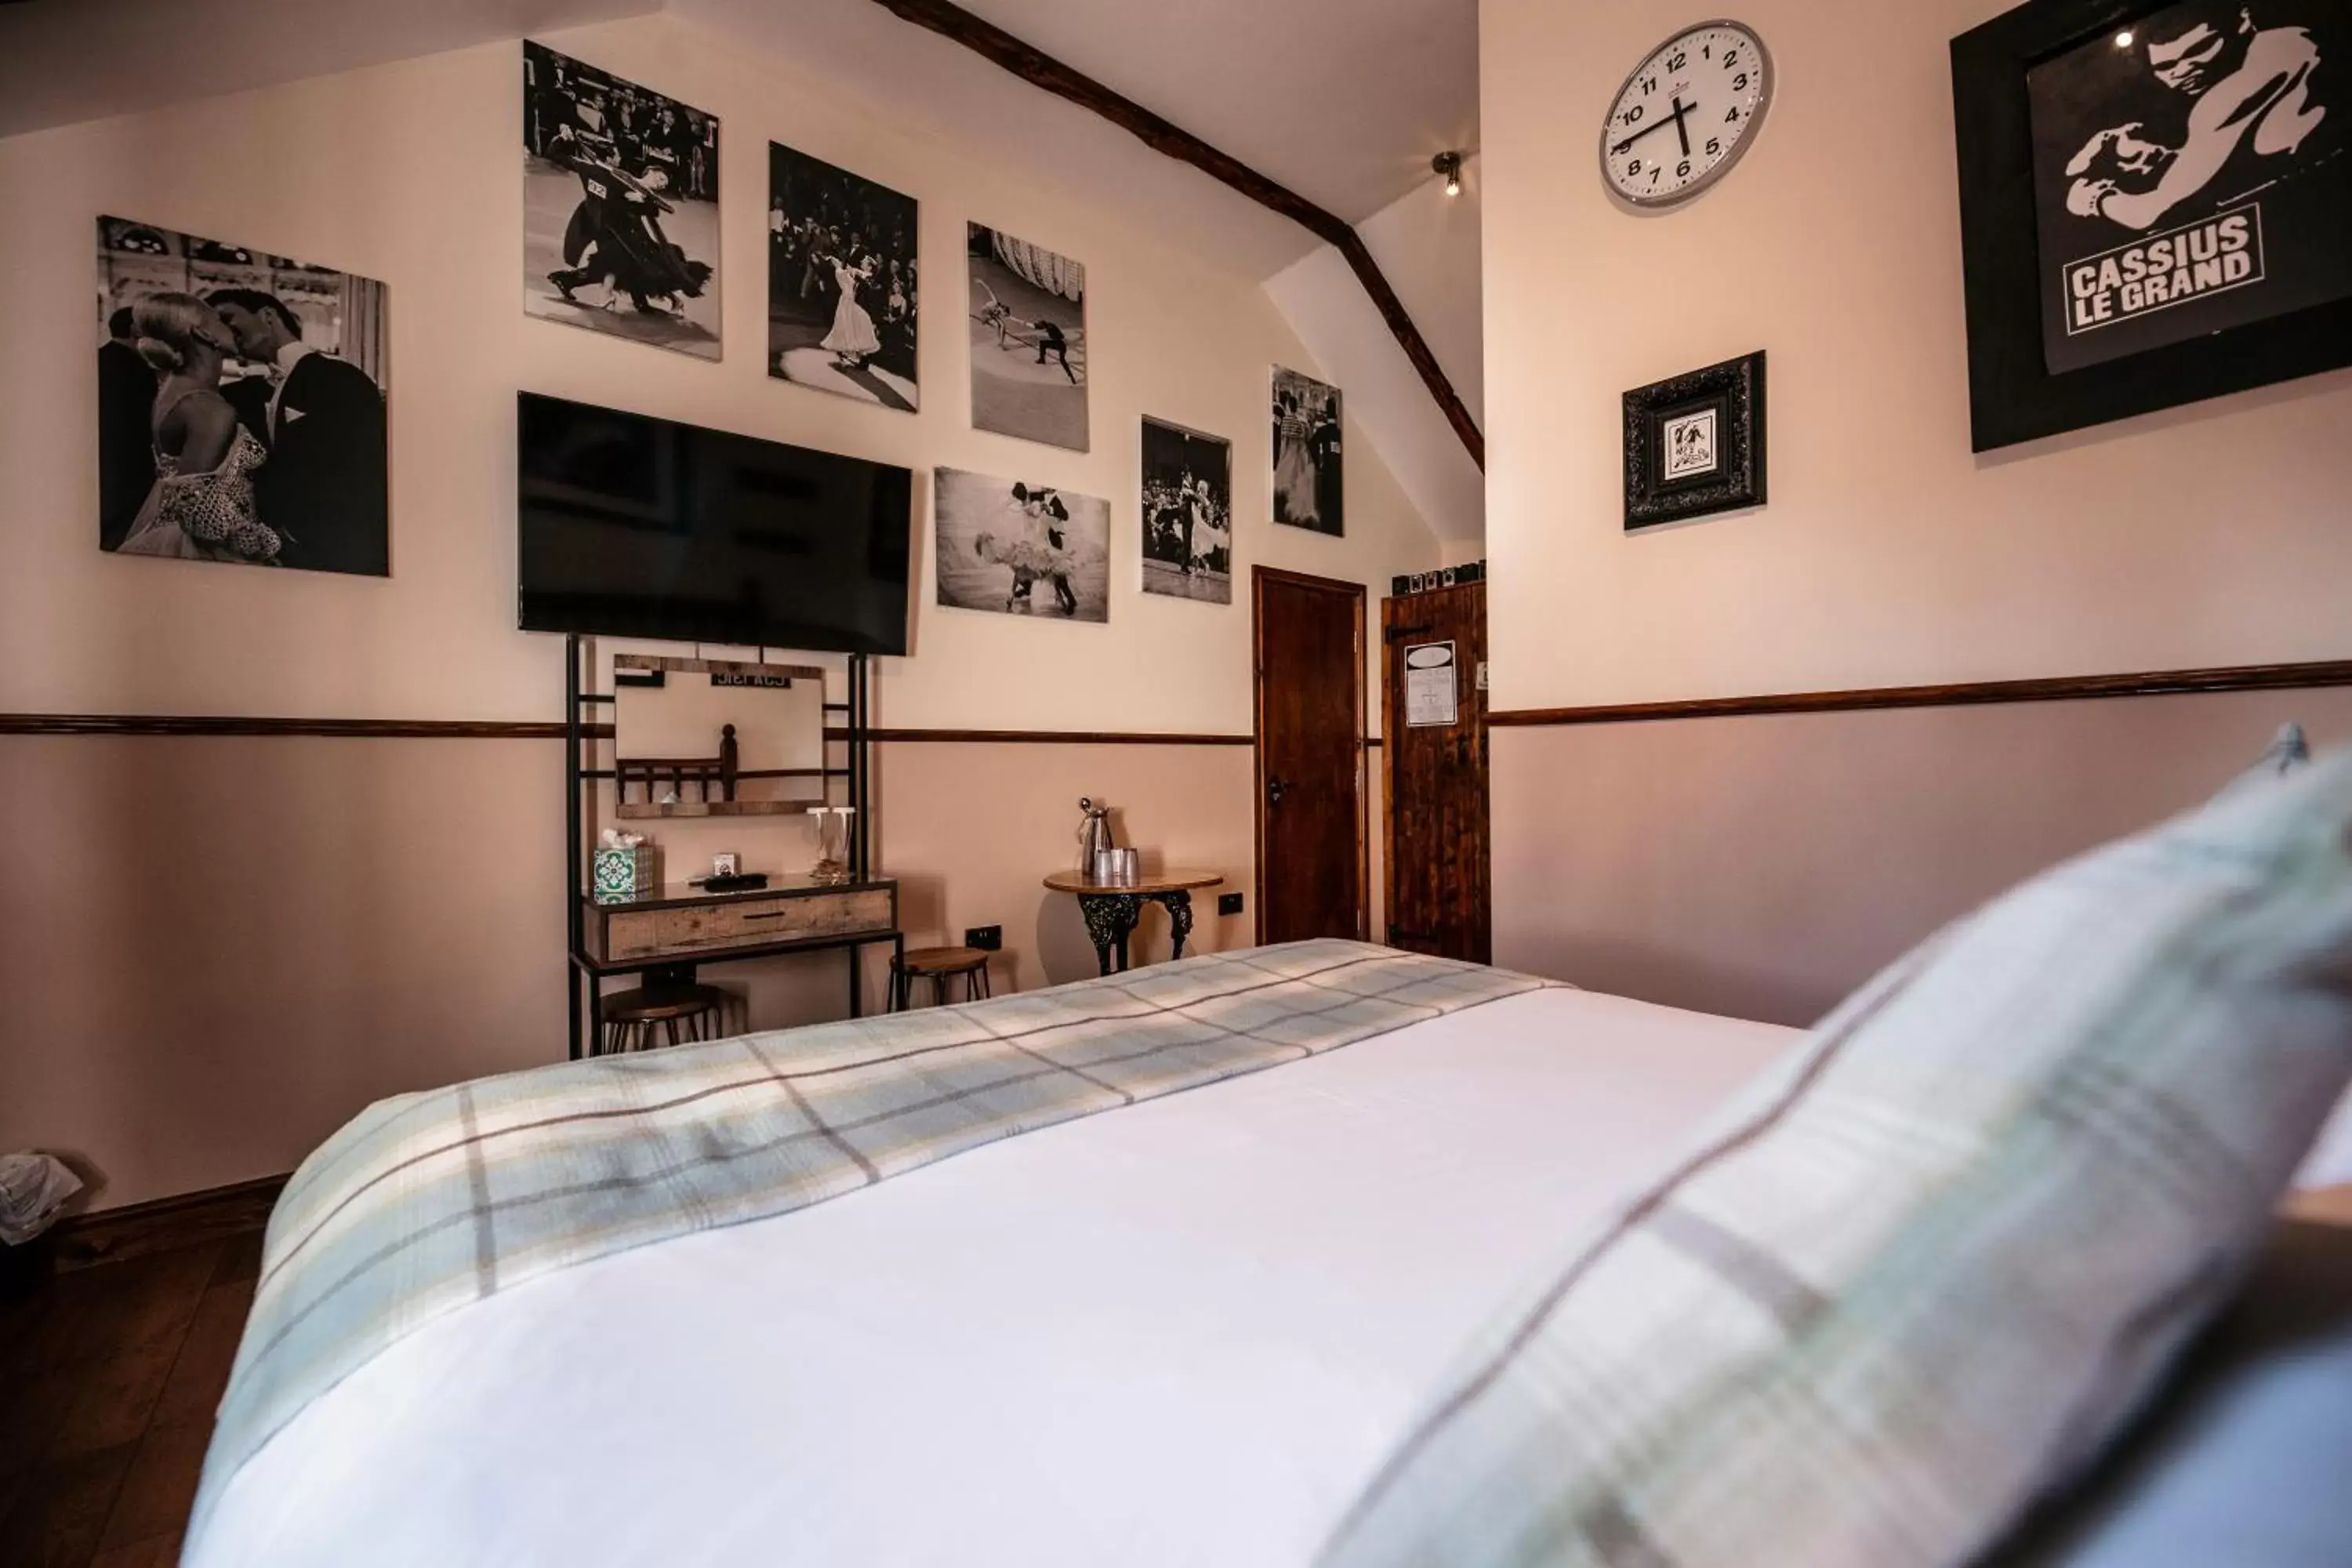 Bedroom in South Causey Inn